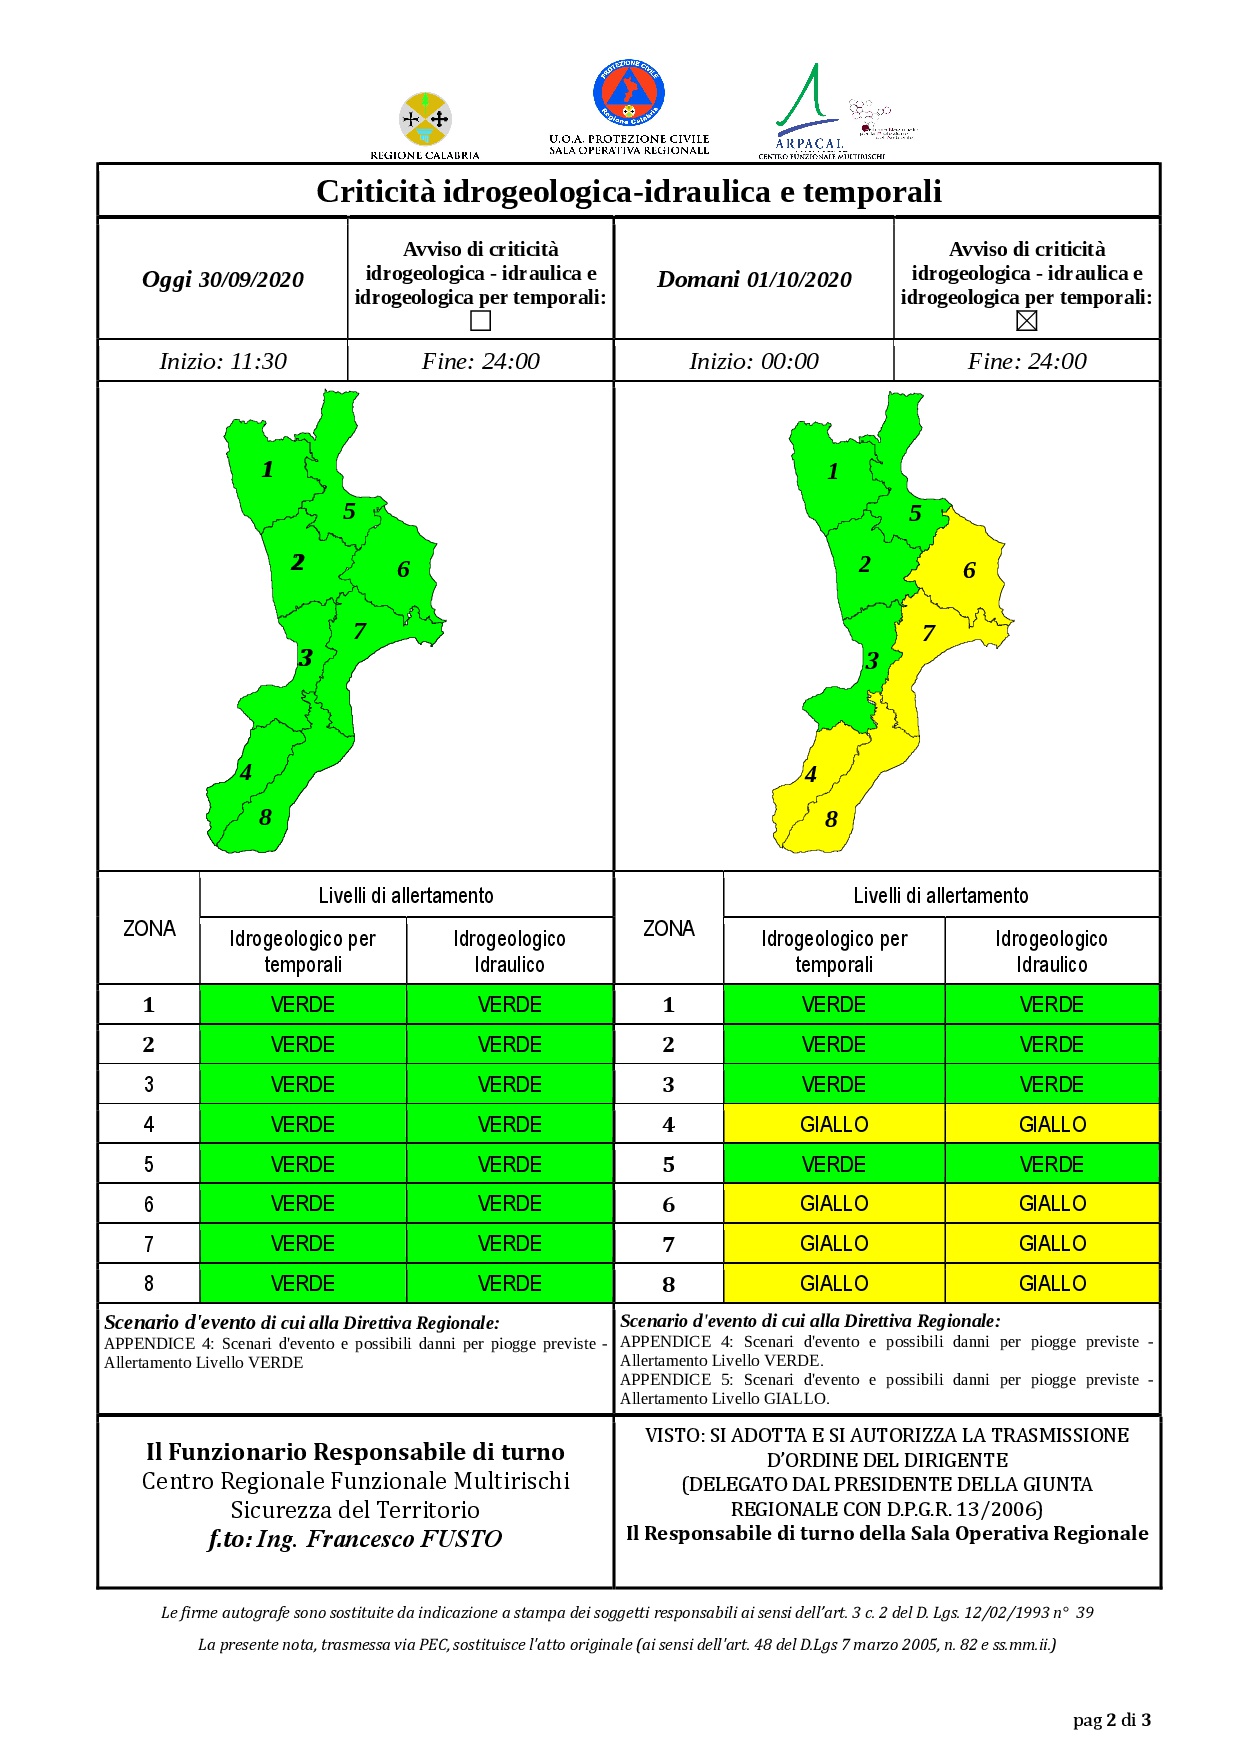 Criticità idrogeologica-idraulica e temporali in Calabria 30-09-2020